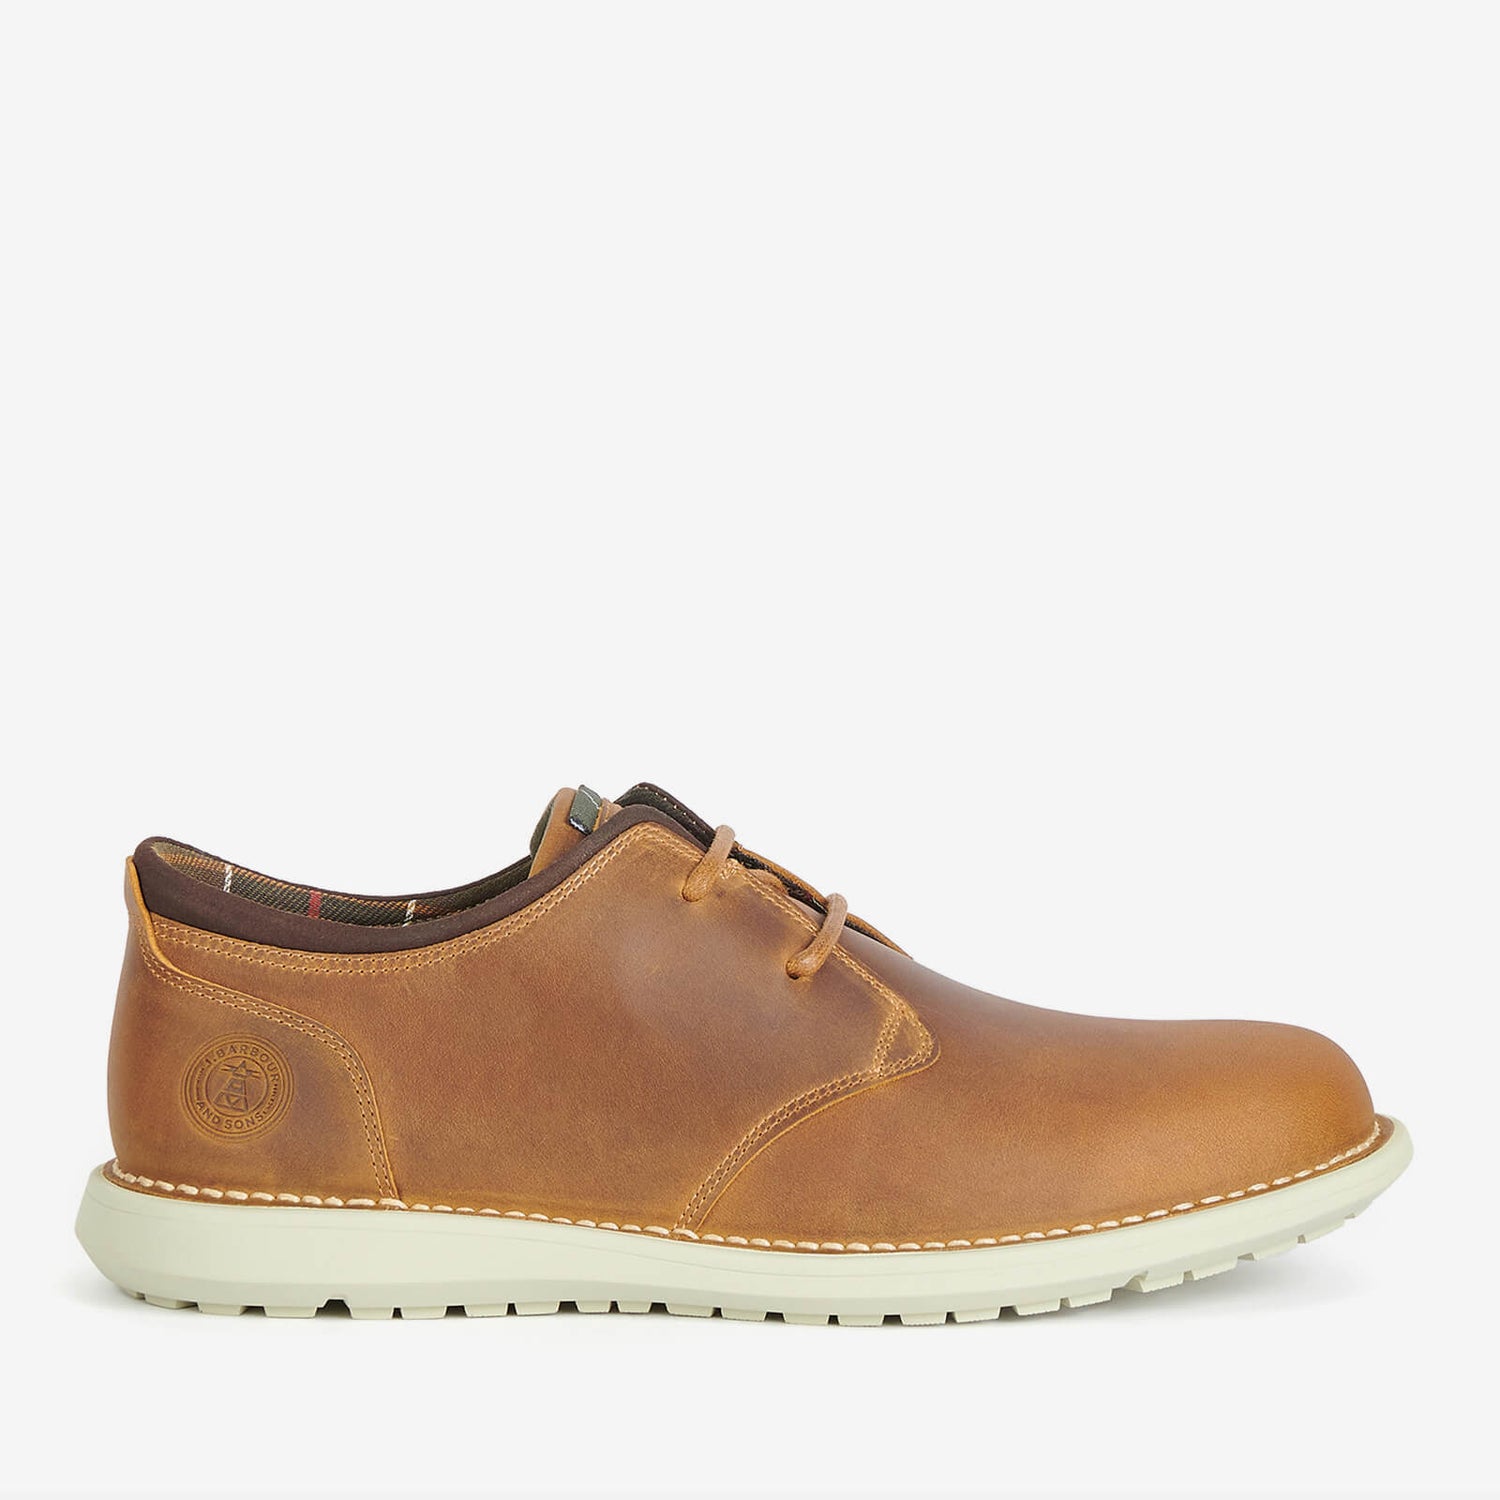 Barbour Men's Acer Leather Derby Shoes - UK 11